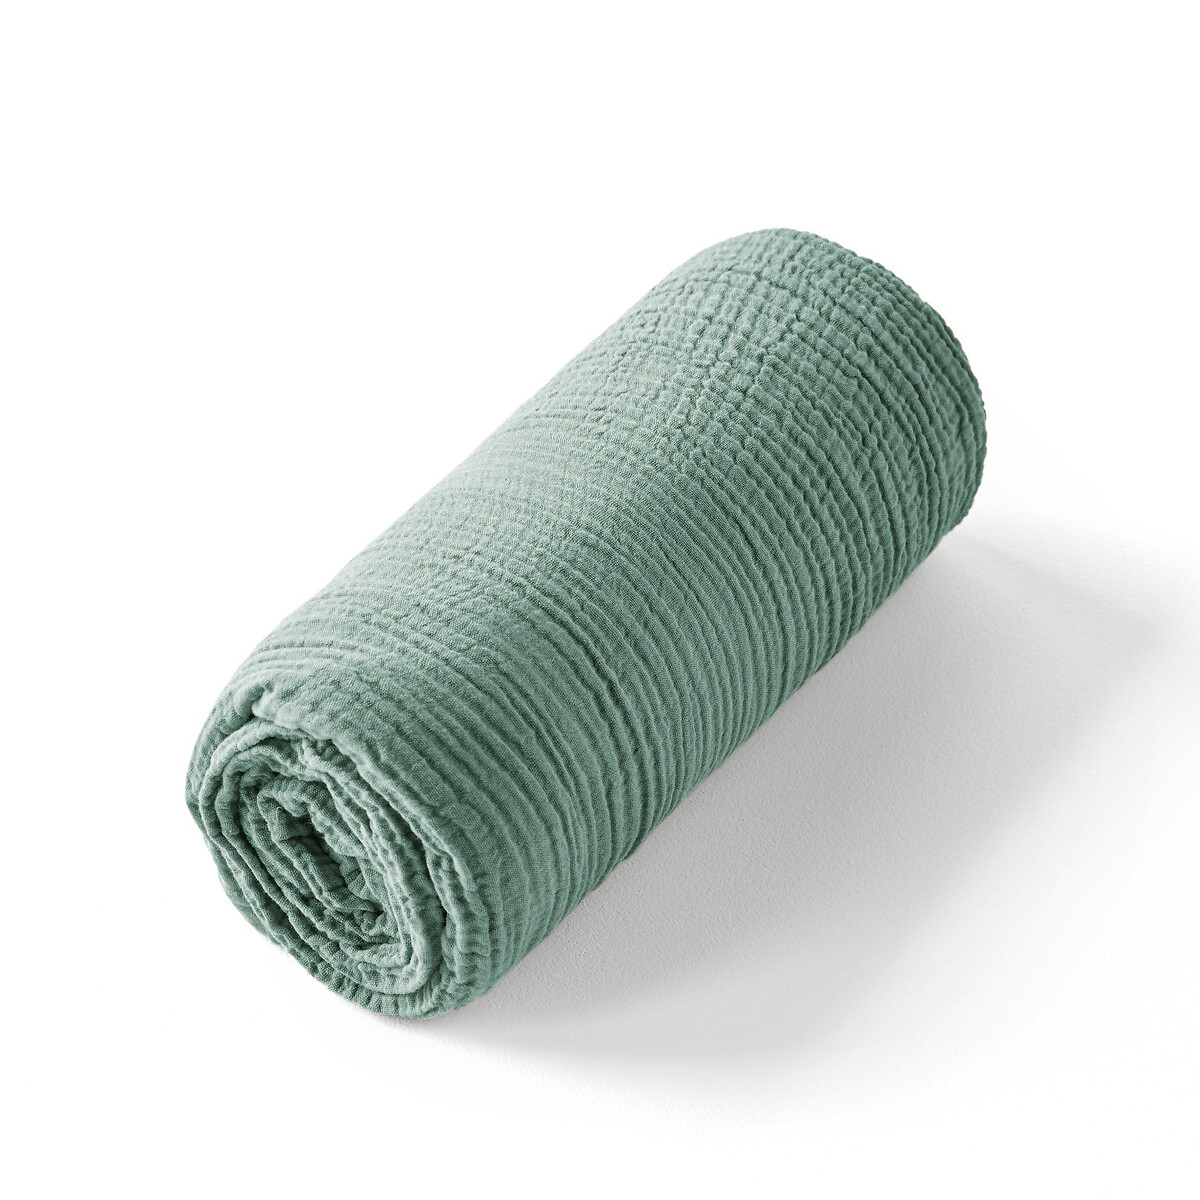 Yafa 100% Organic Cotton Muslin 200 Thread Count Fitted Sheet